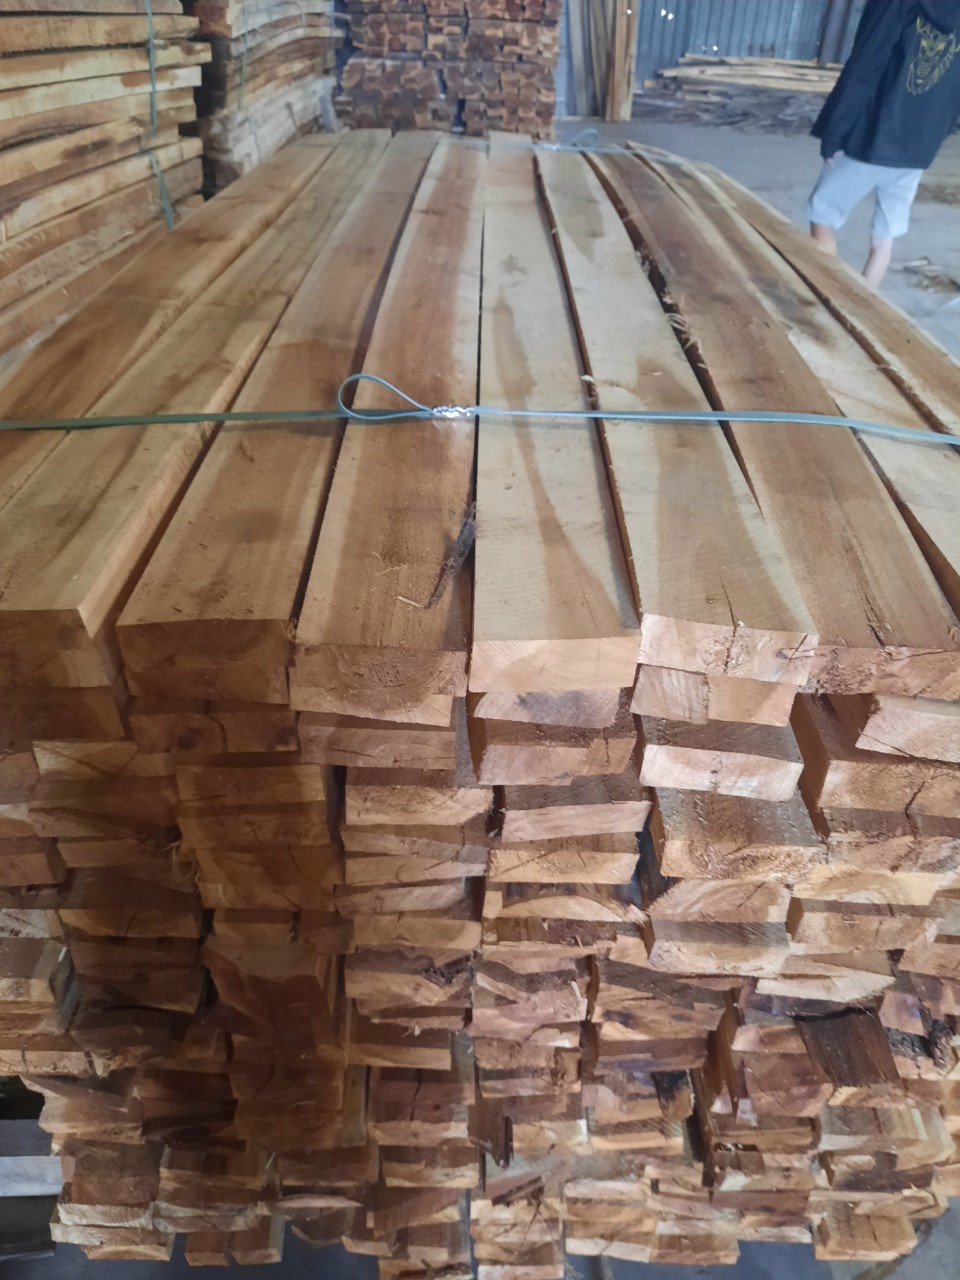 Melaleuca wood